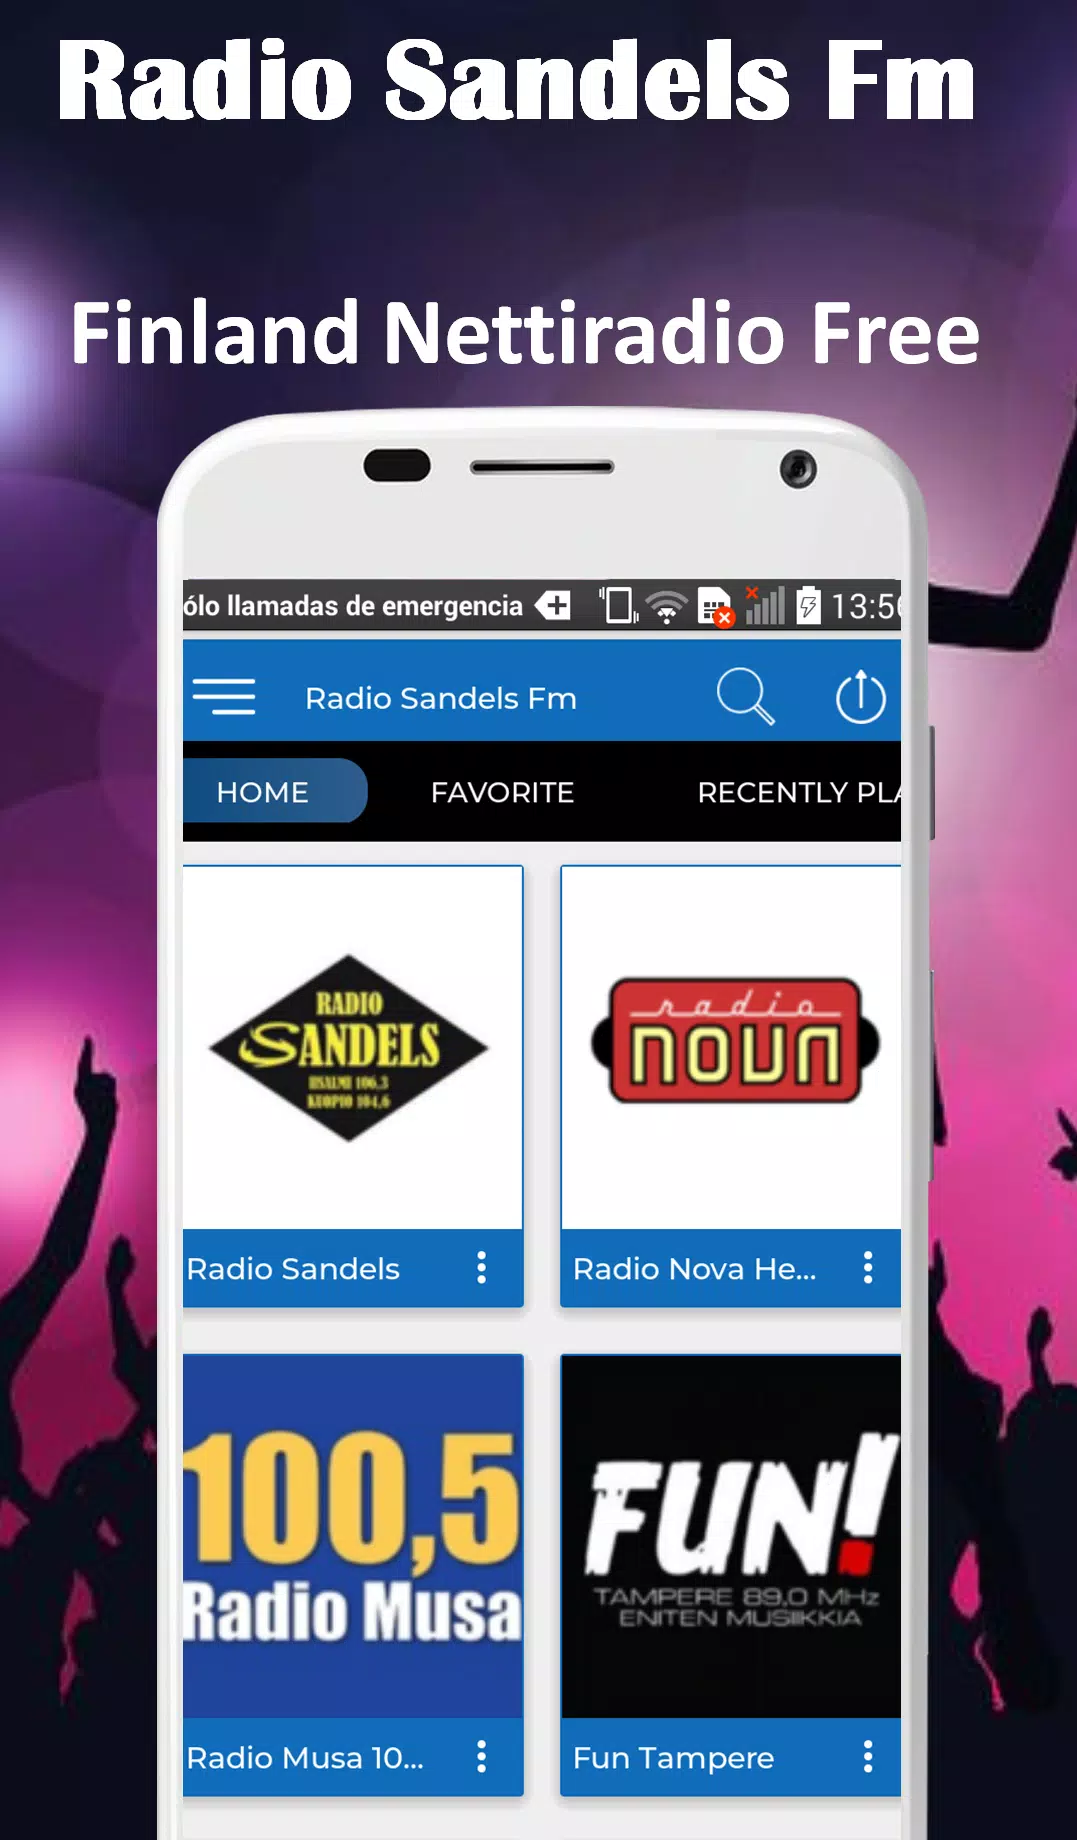 Radio Sandels Fm Finland Nettiradio Free APK pour Android Télécharger